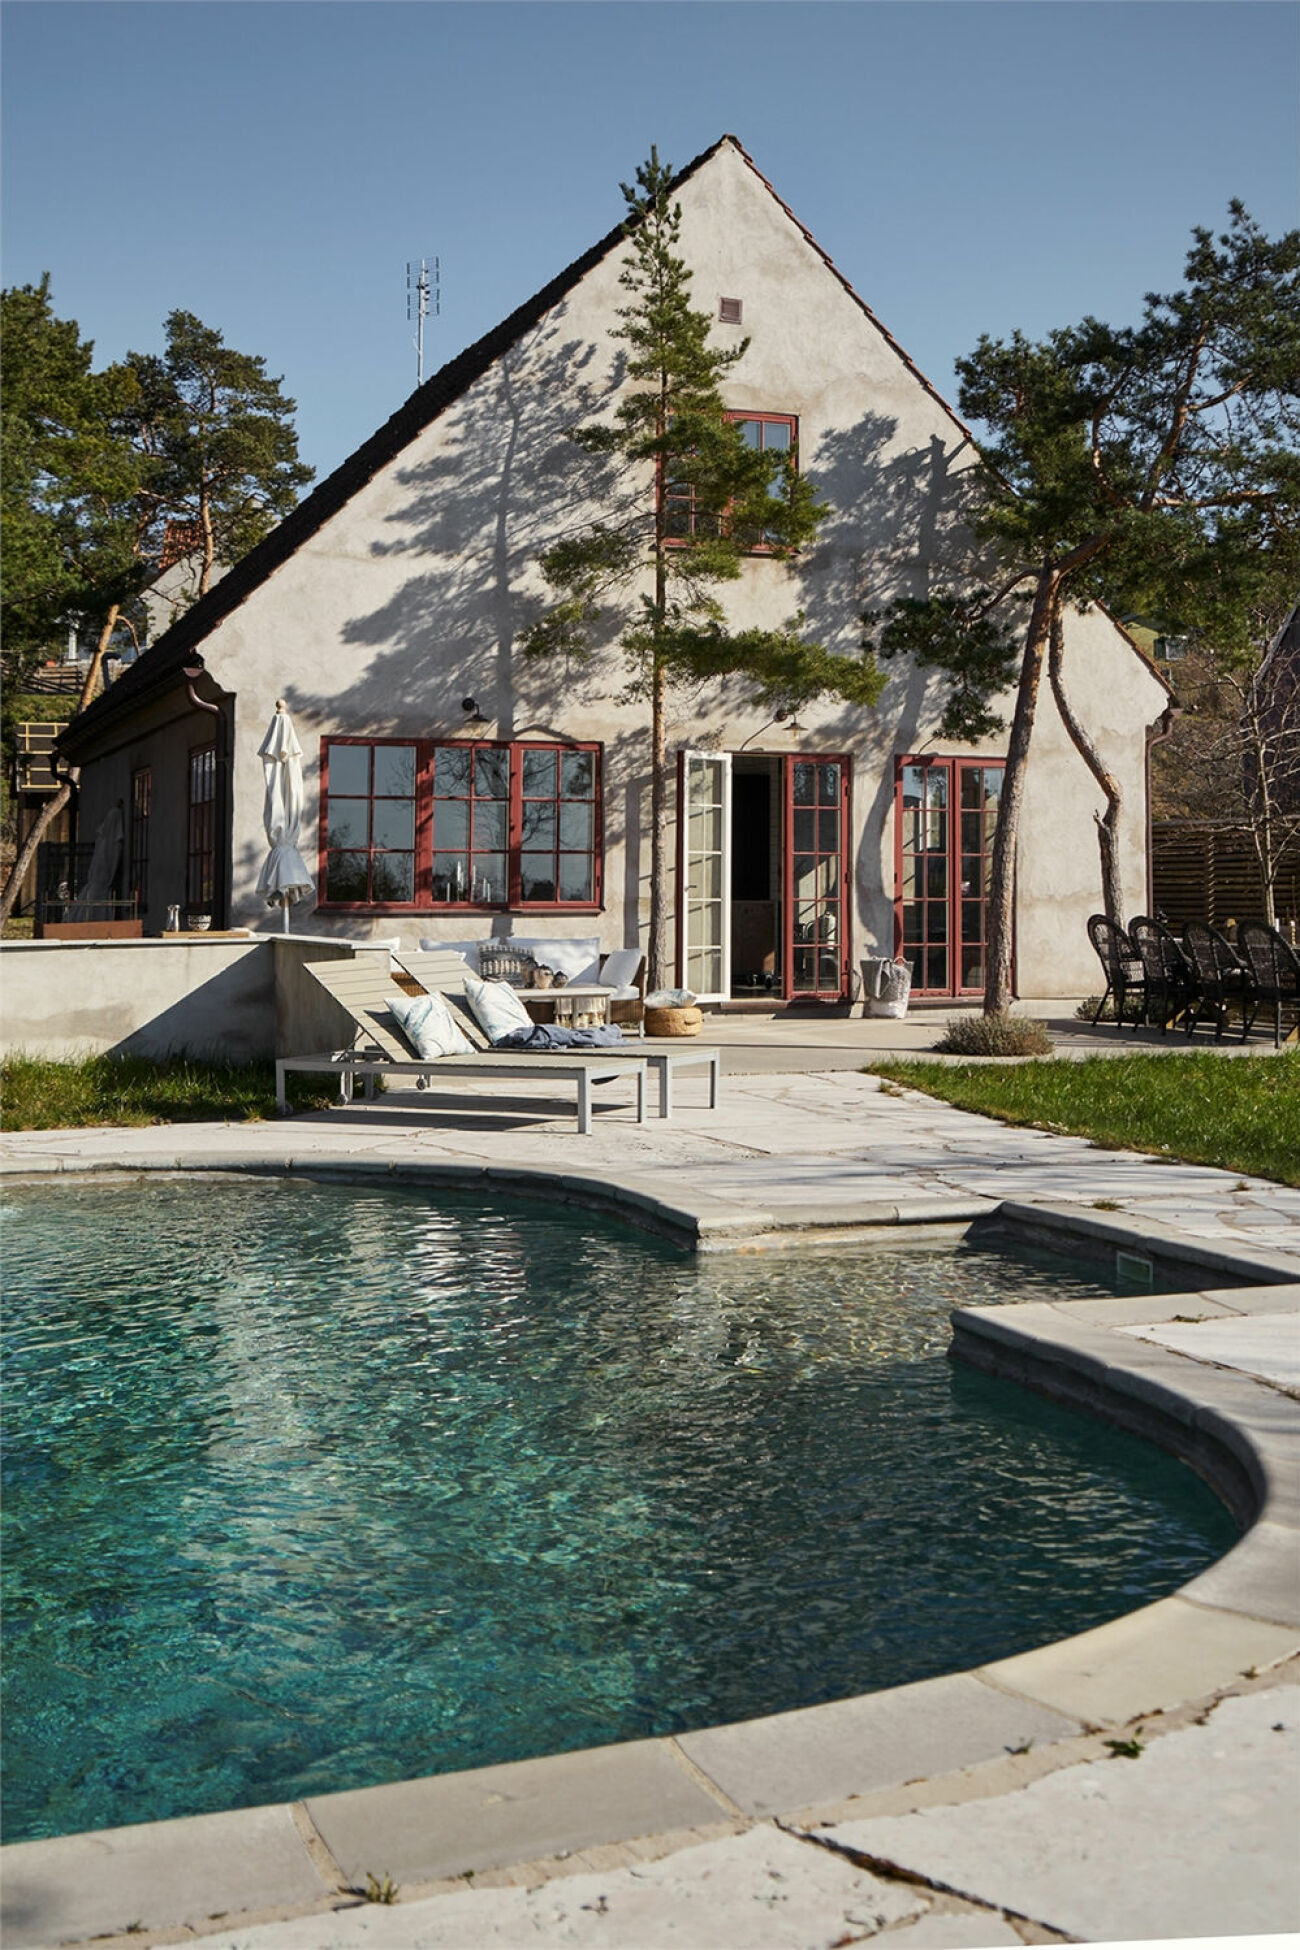 Sommarhus på Gotland med pool